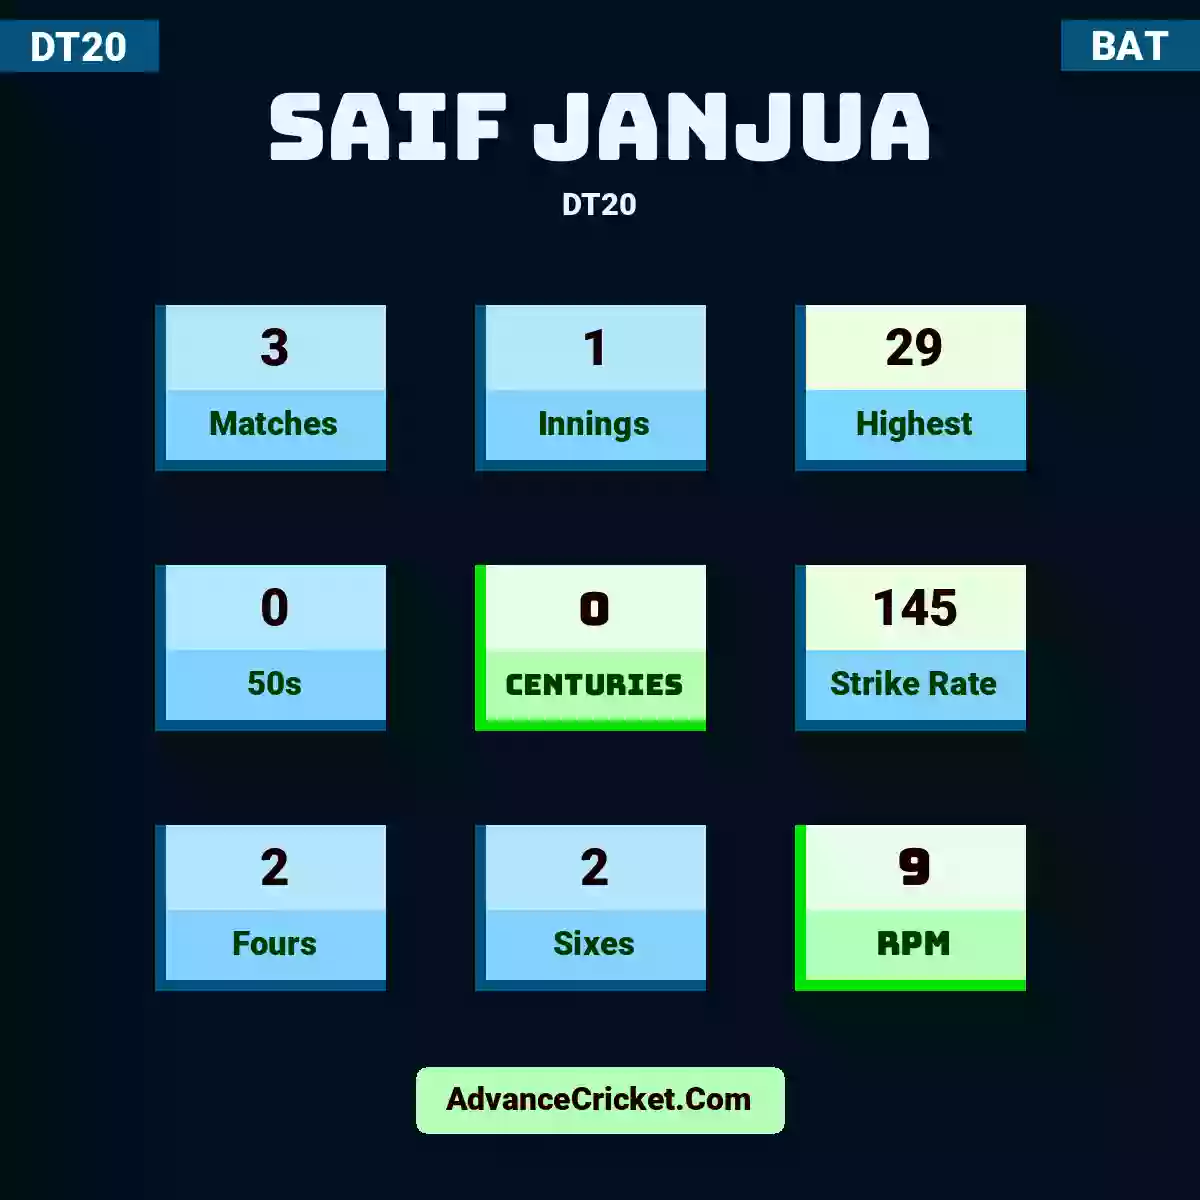 Saif Janjua DT20 , Saif Janjua played 3 matches, scored 29 runs as highest, 0 half-centuries, and 0 centuries, with a strike rate of 145. S.Janjua hit 2 fours and 2 sixes, with an RPM of 9.